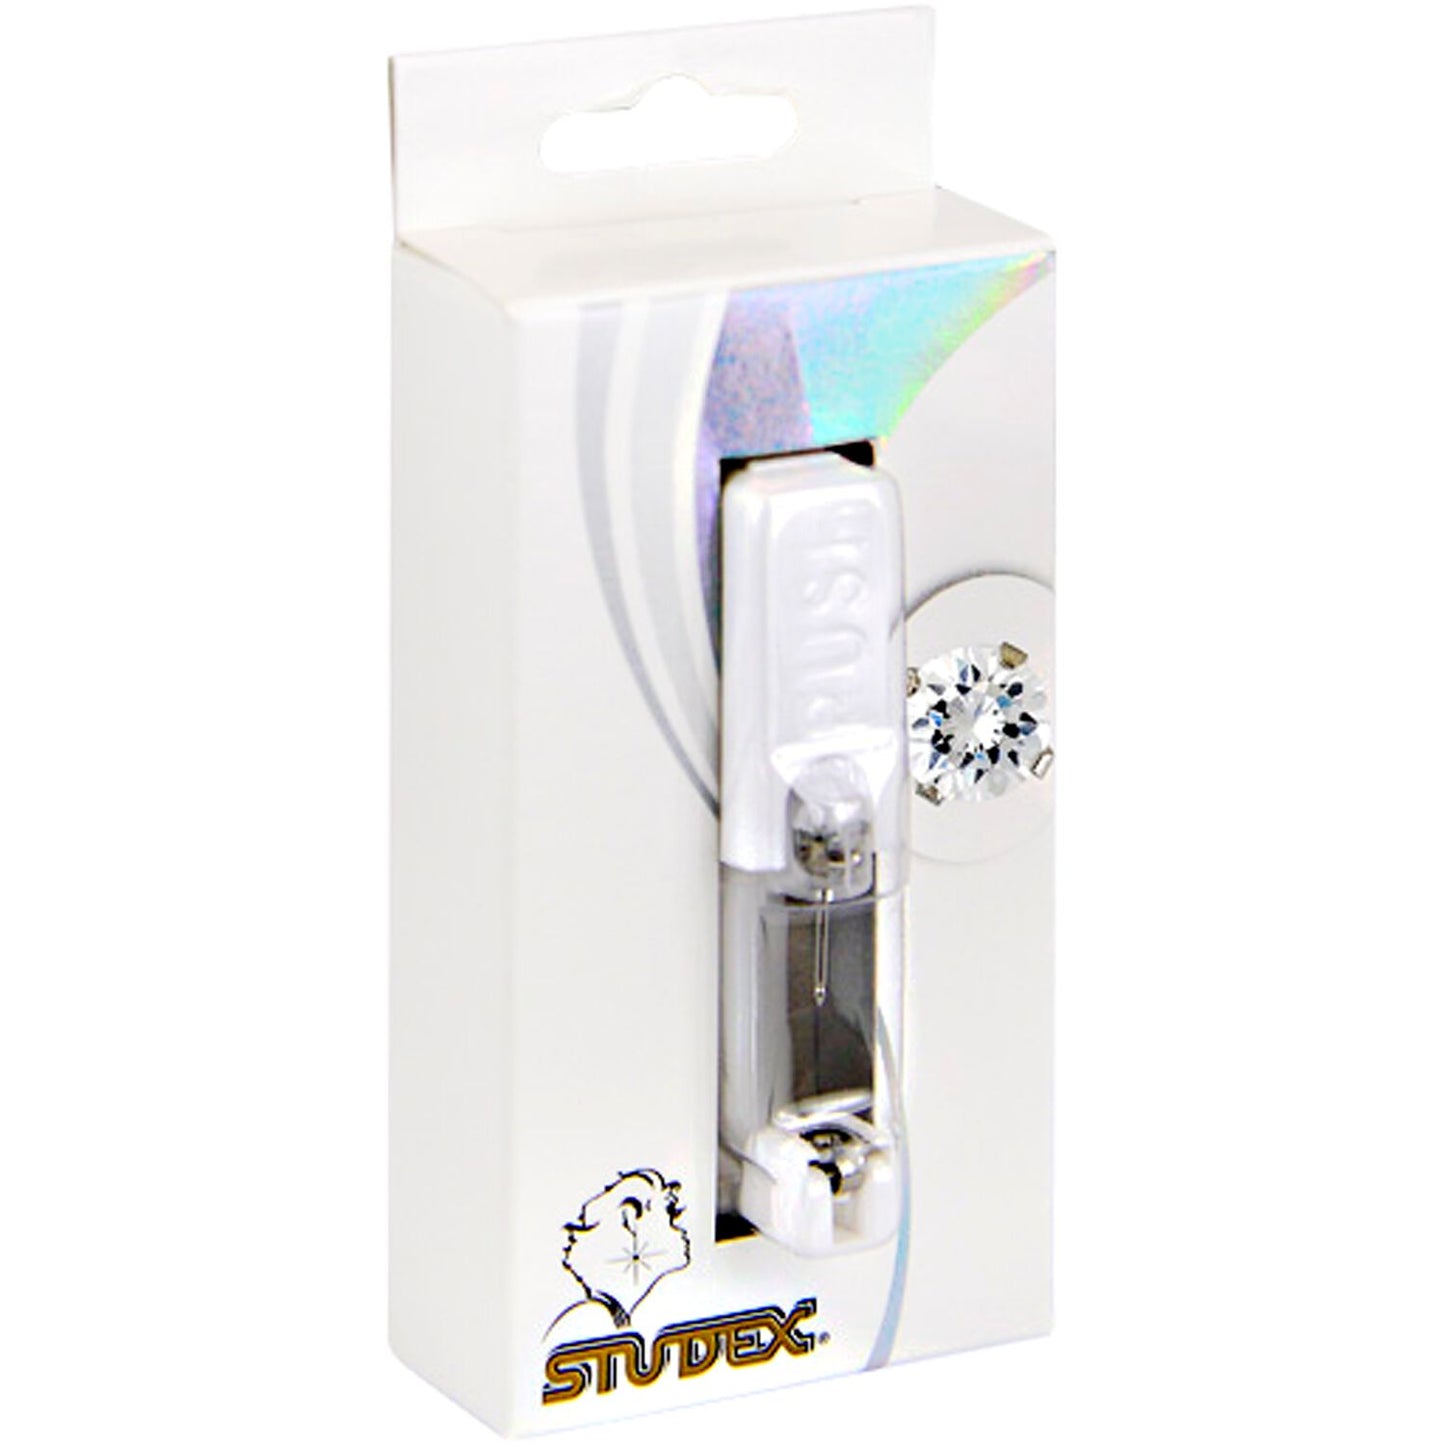 Studex System 75 Single Piercing Earring